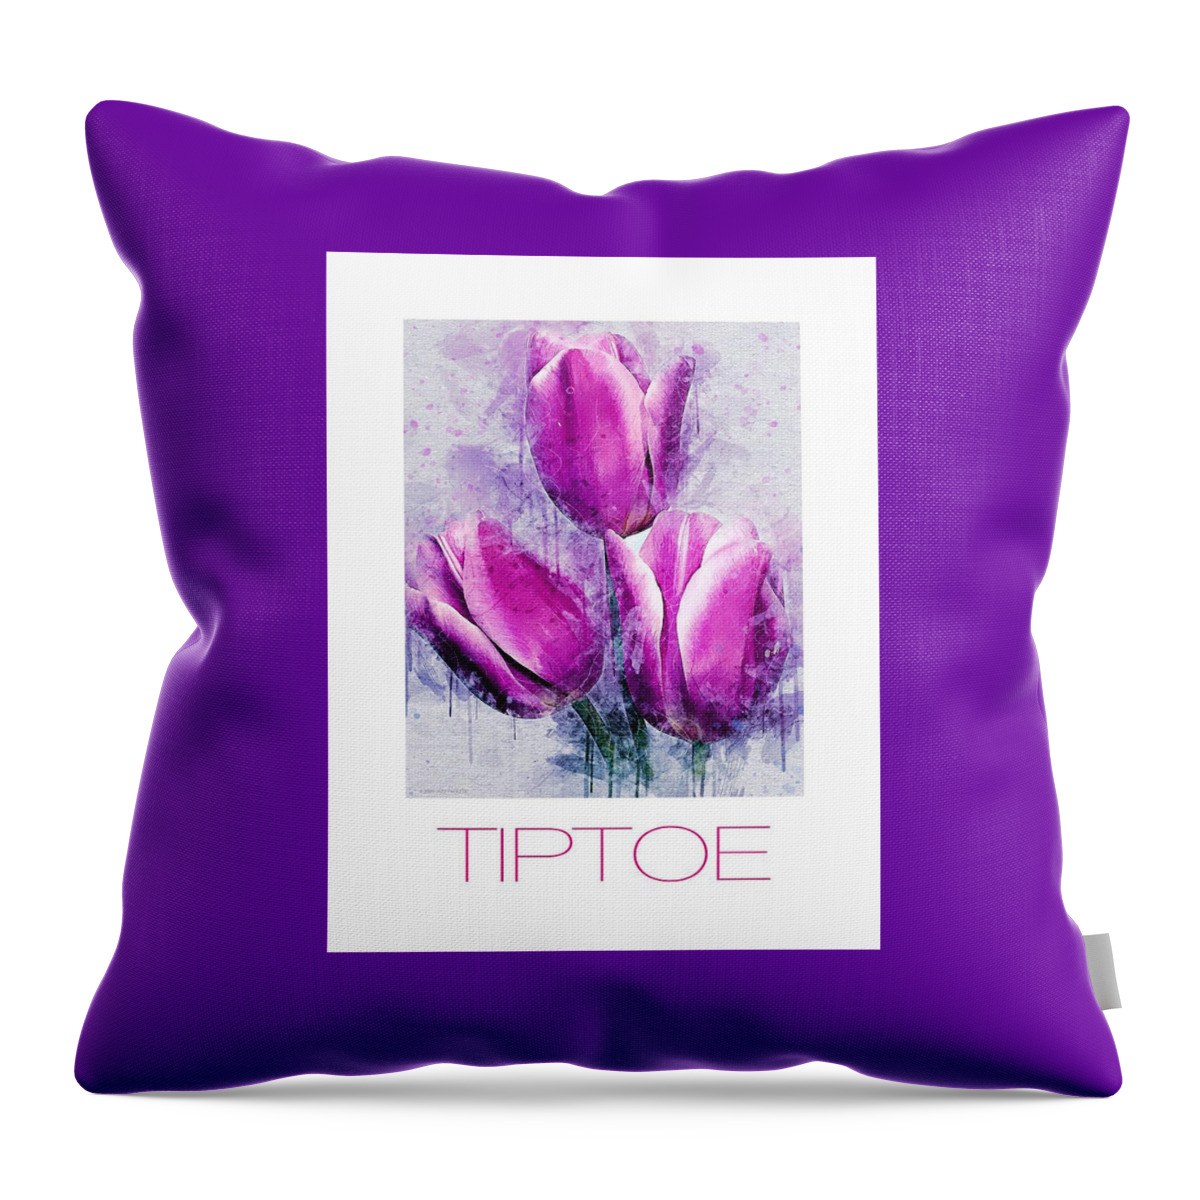 Tiptoe Throw Pillow featuring the digital art Tiptoe by Gail Marten